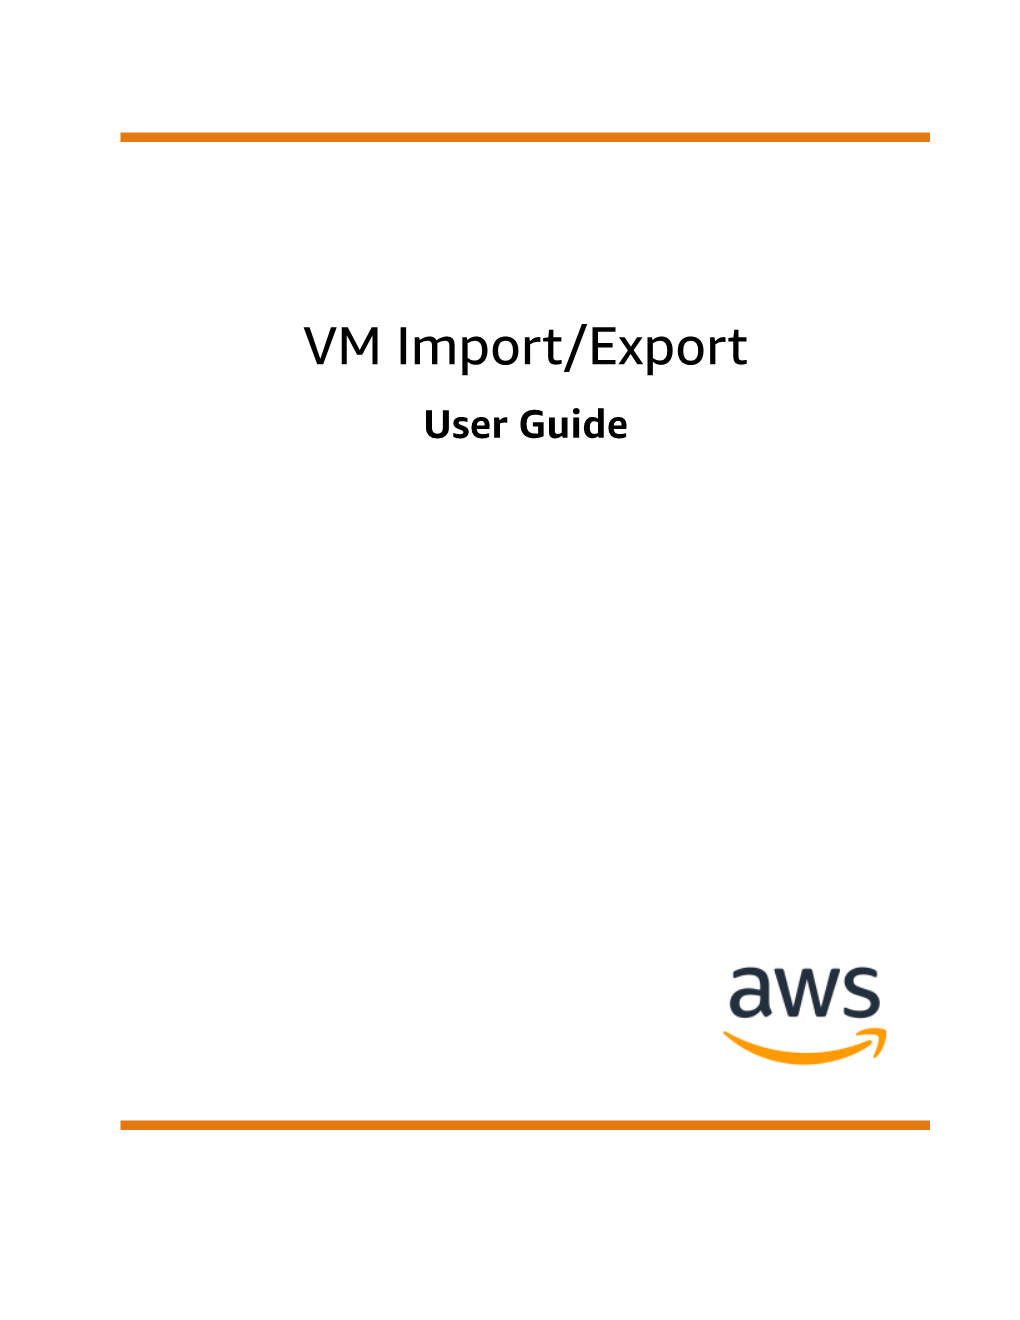 VM Import/Export User Guide VM Import/Export User Guide